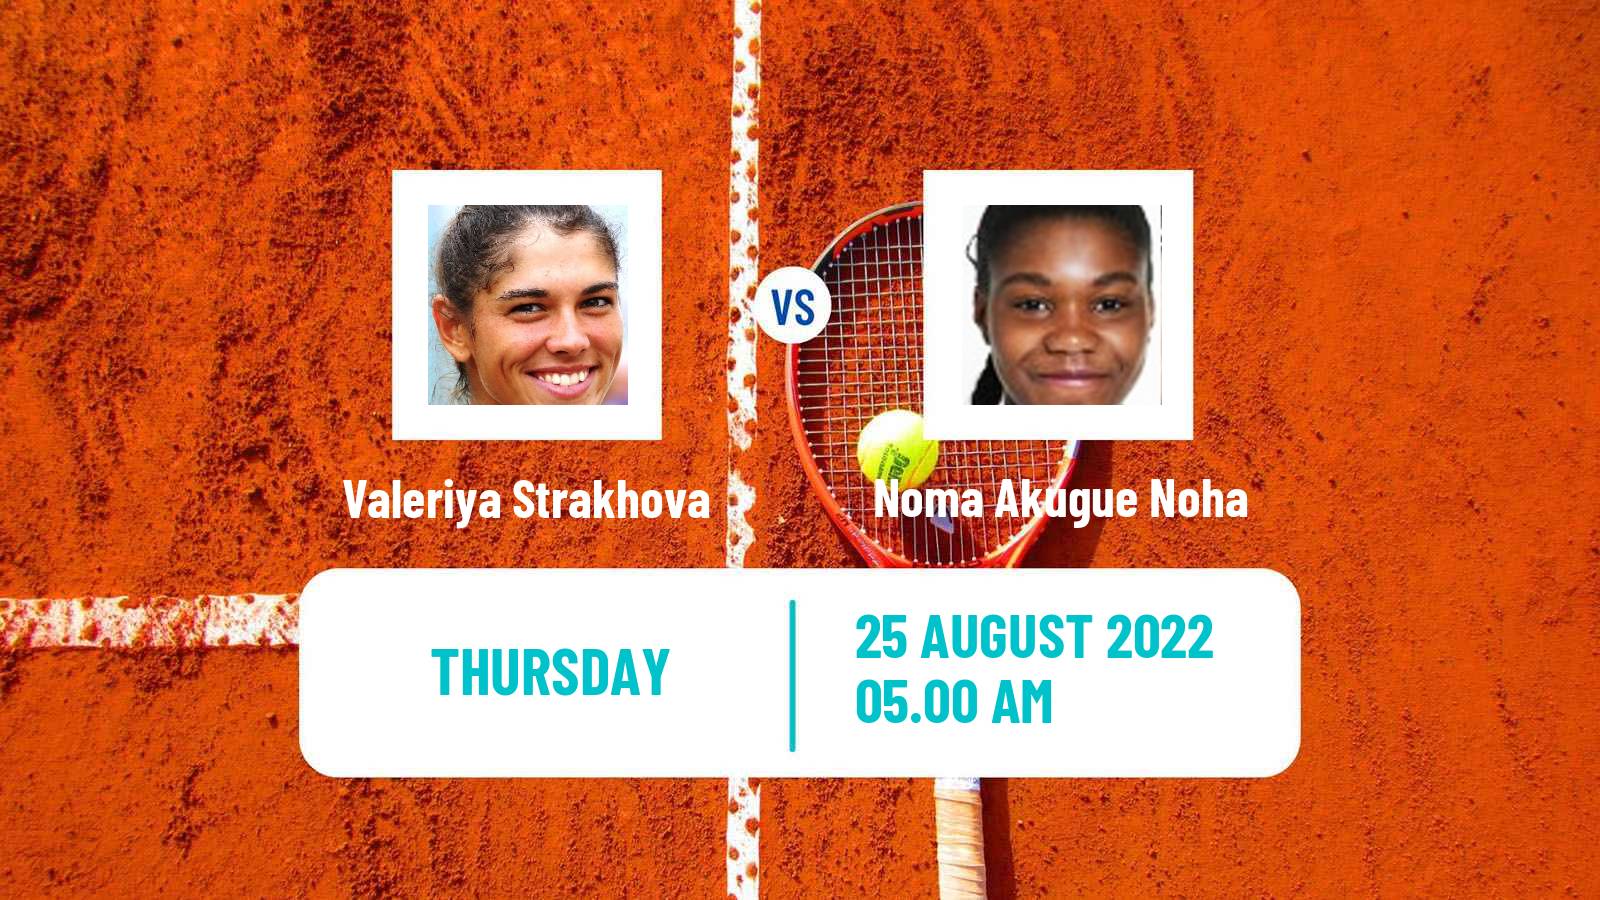 Tennis ITF Tournaments Valeriya Strakhova - Noma Akugue Noha